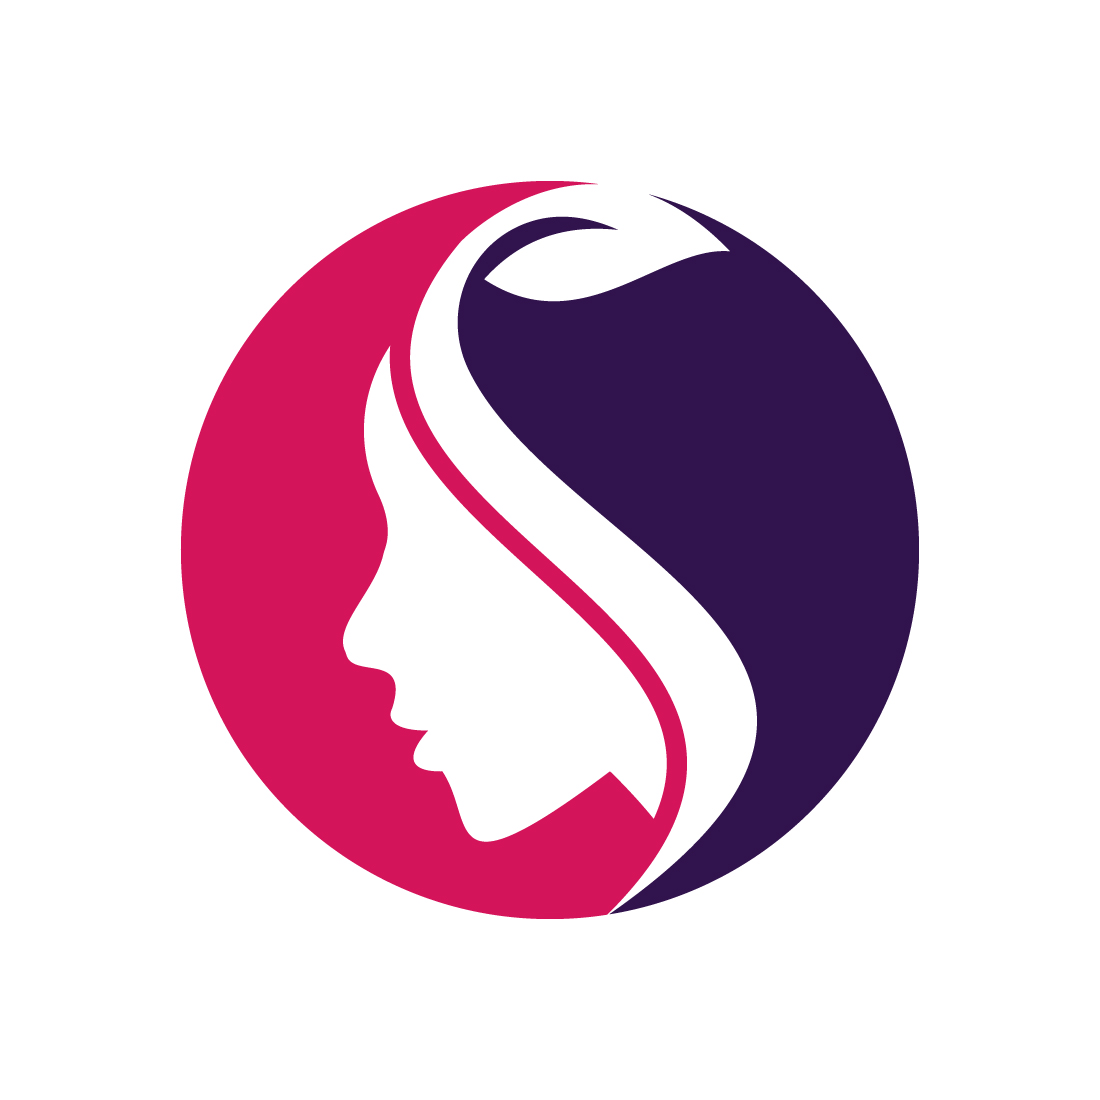 Beauty parlor, Skincare, Salon, Spa, Dermatology Clinic Flower Logo Design Vector design concept preview image.